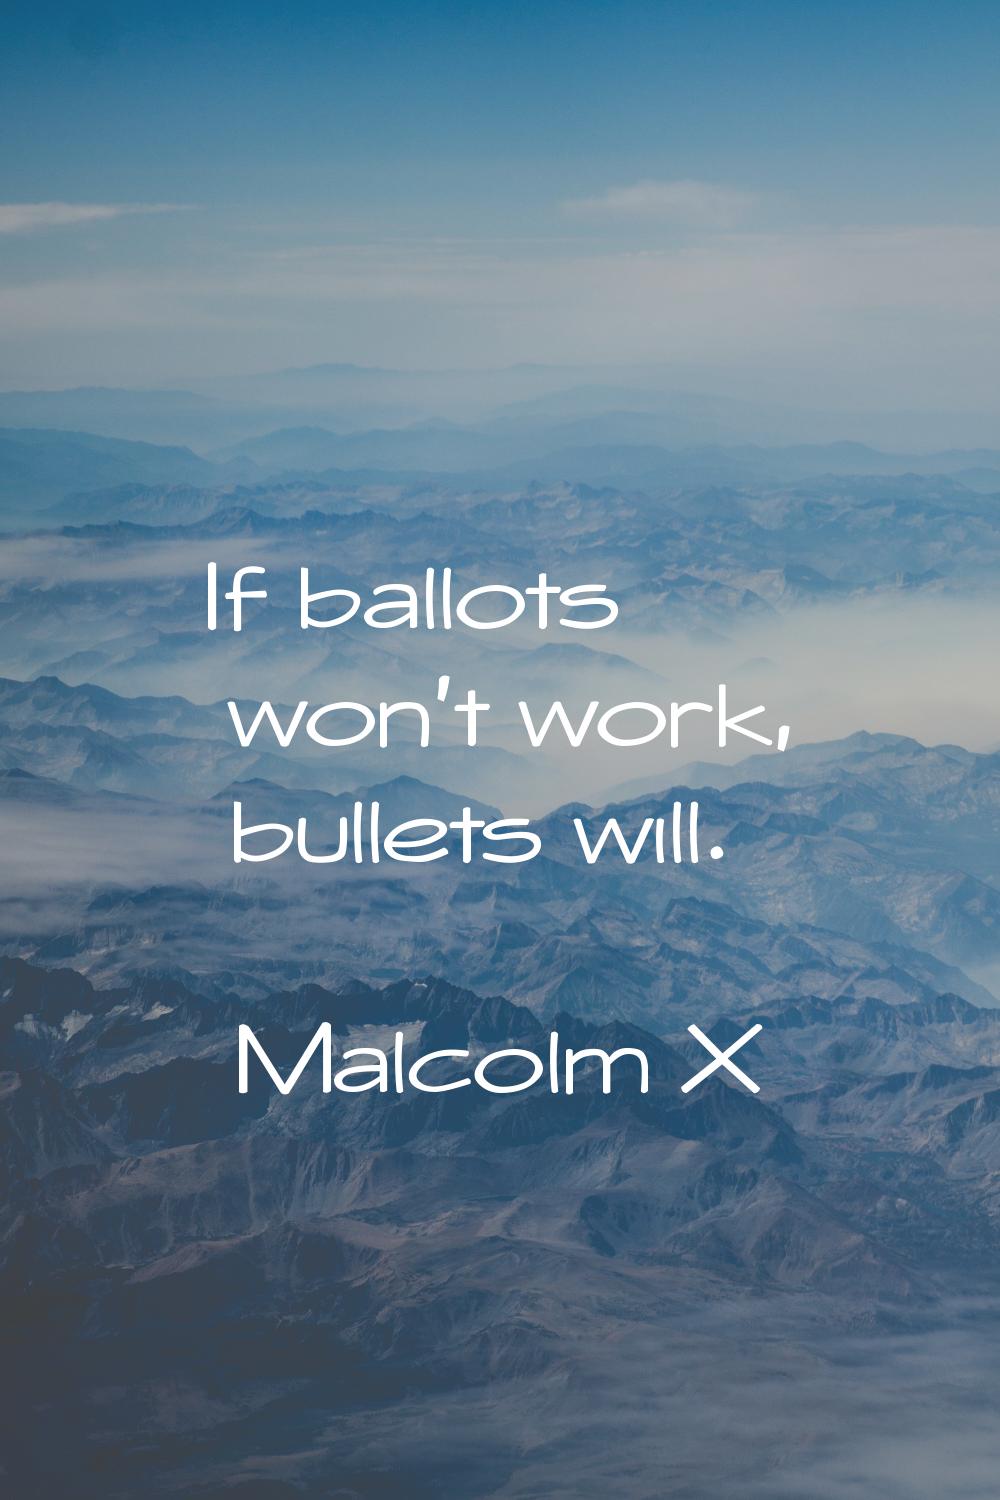 If ballots won't work, bullets will.